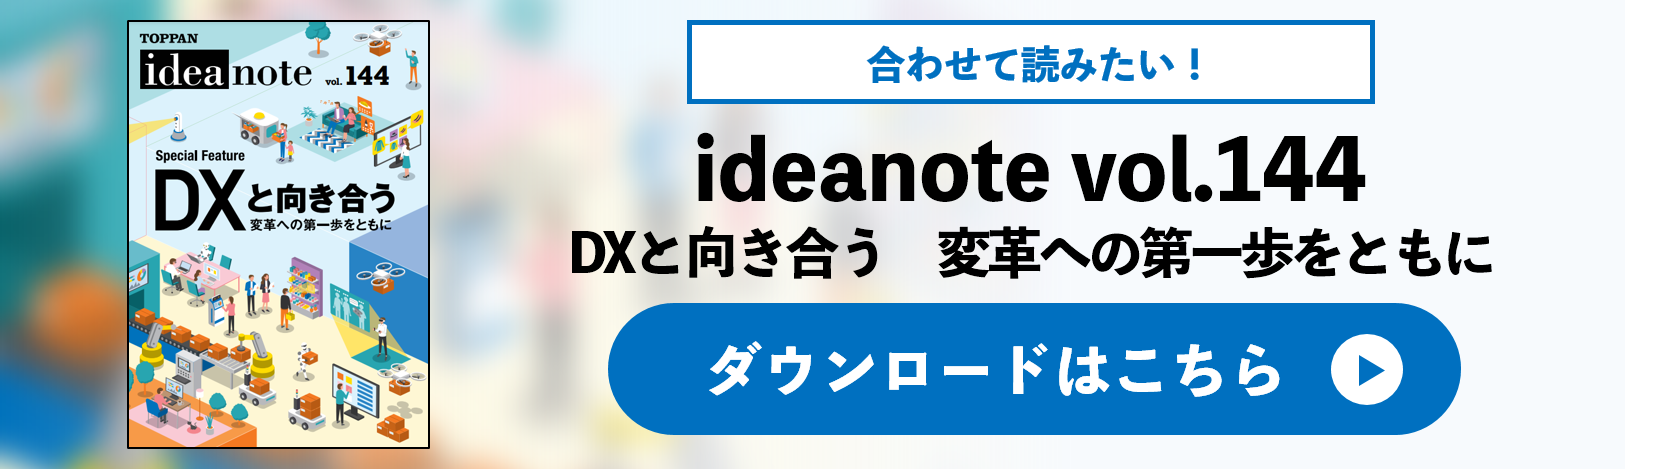 ideanote vol.144 DXと向き合う～変革への第一歩をともに～